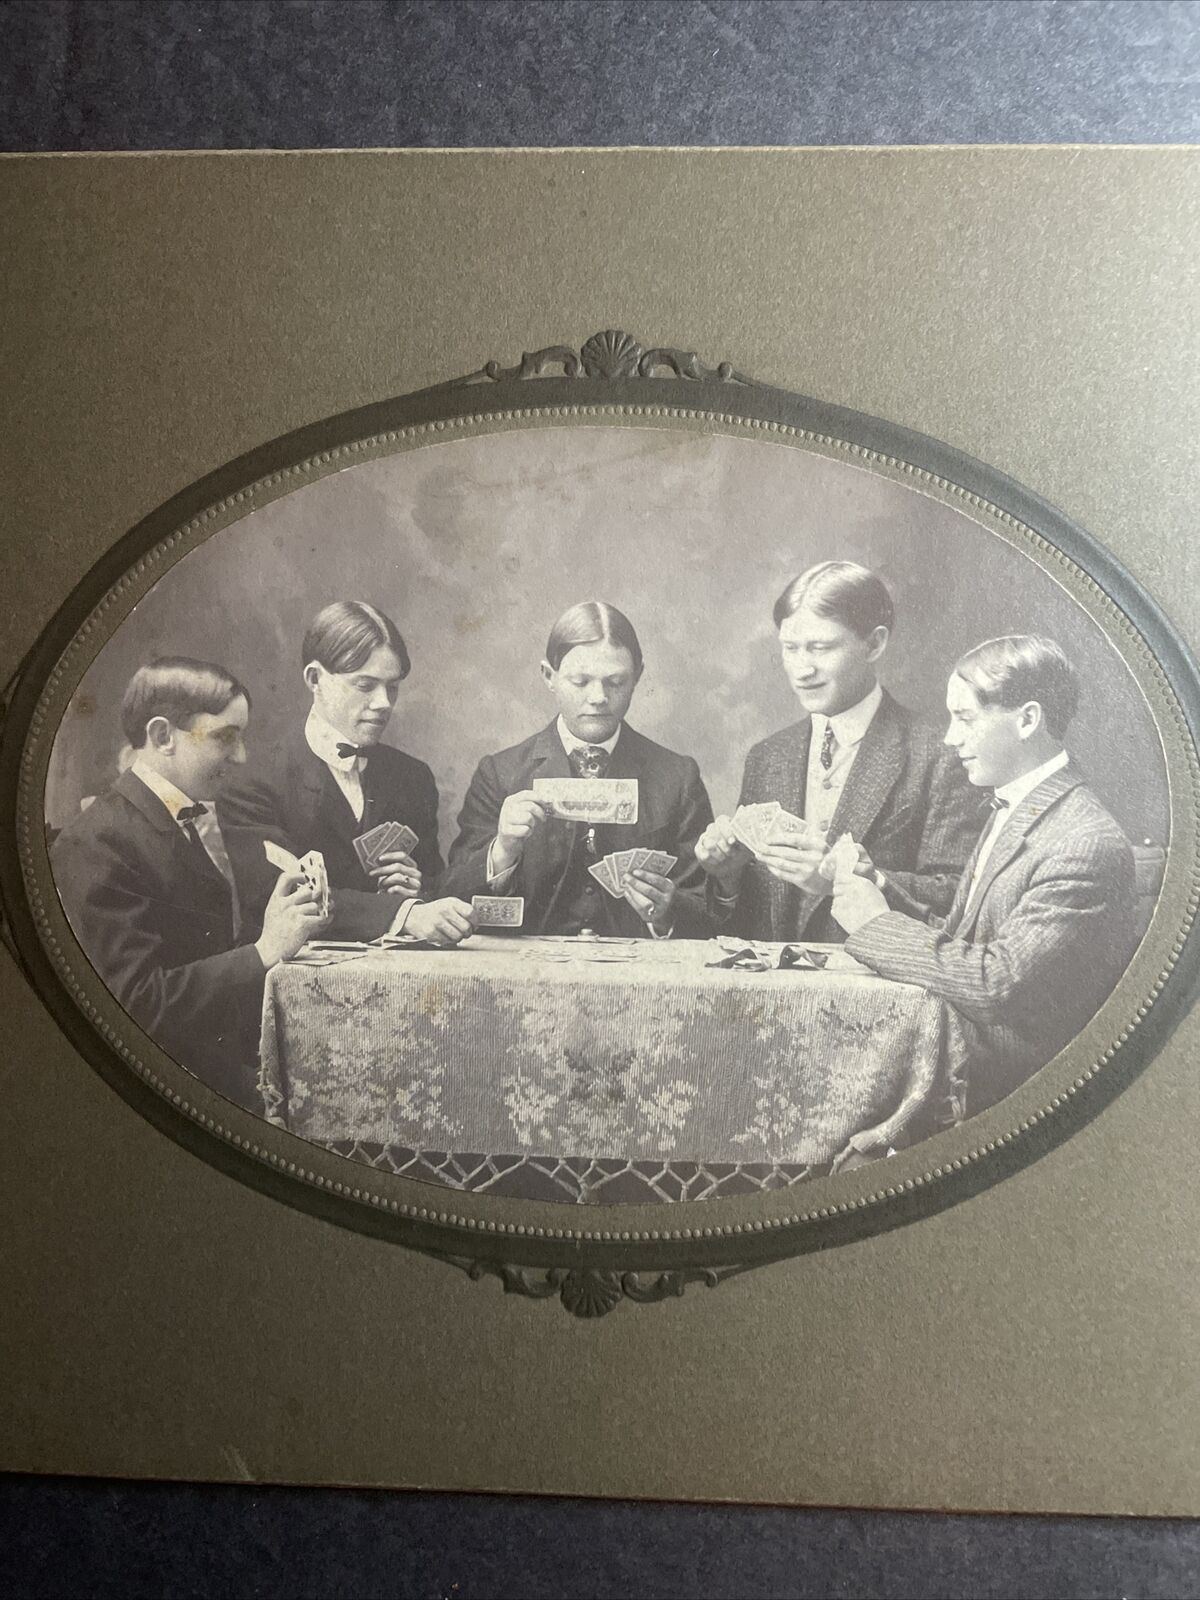 Cabinet Photo Of Men Playing Poker, Gambler Occupational